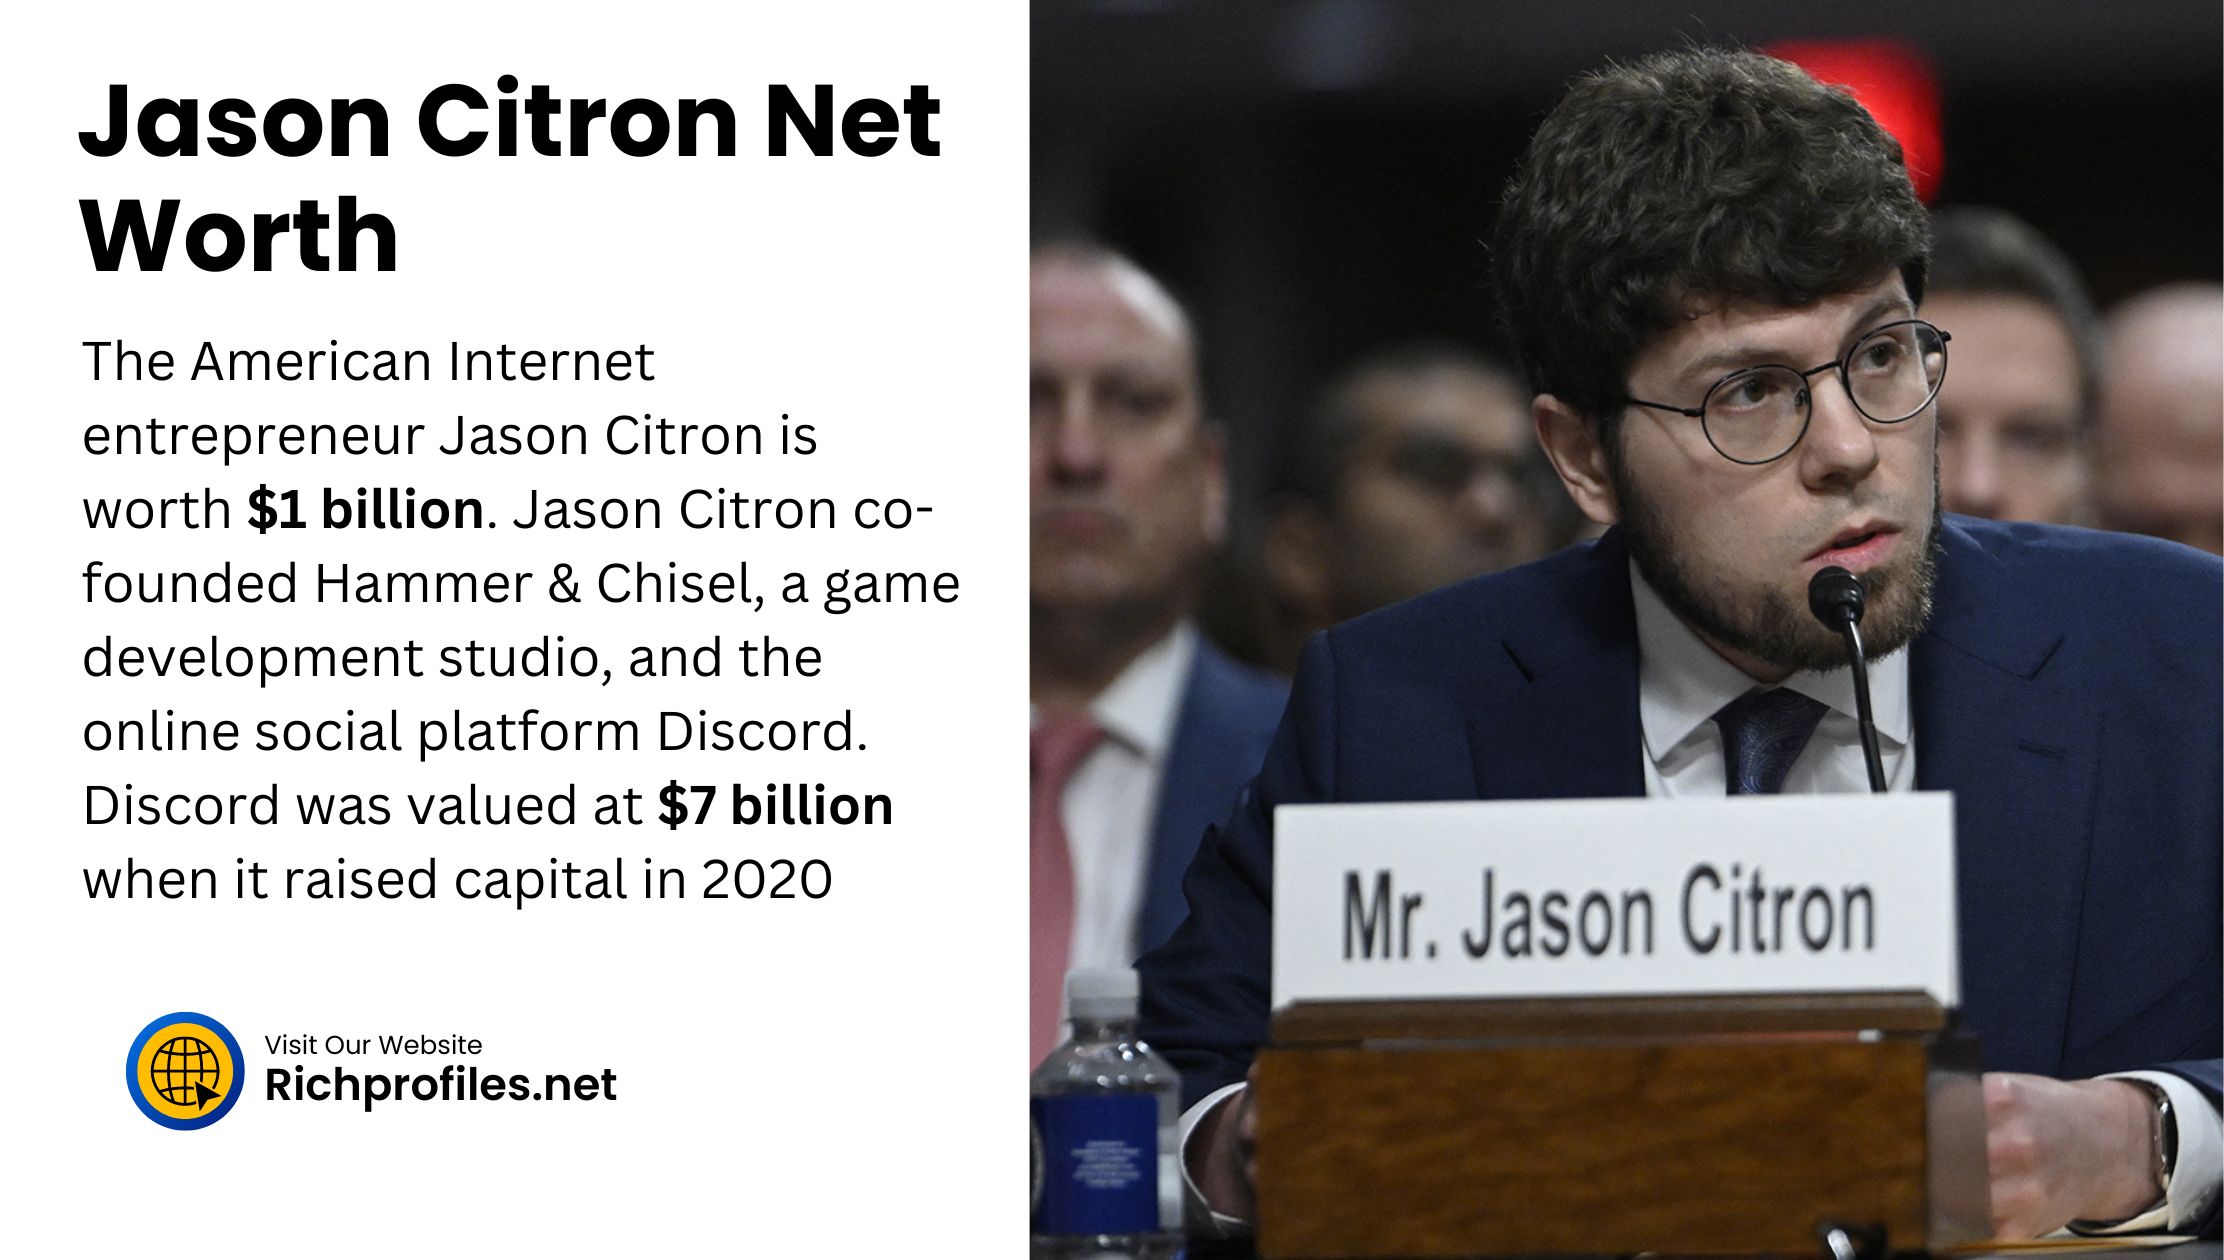 Jason Citron Net Worth